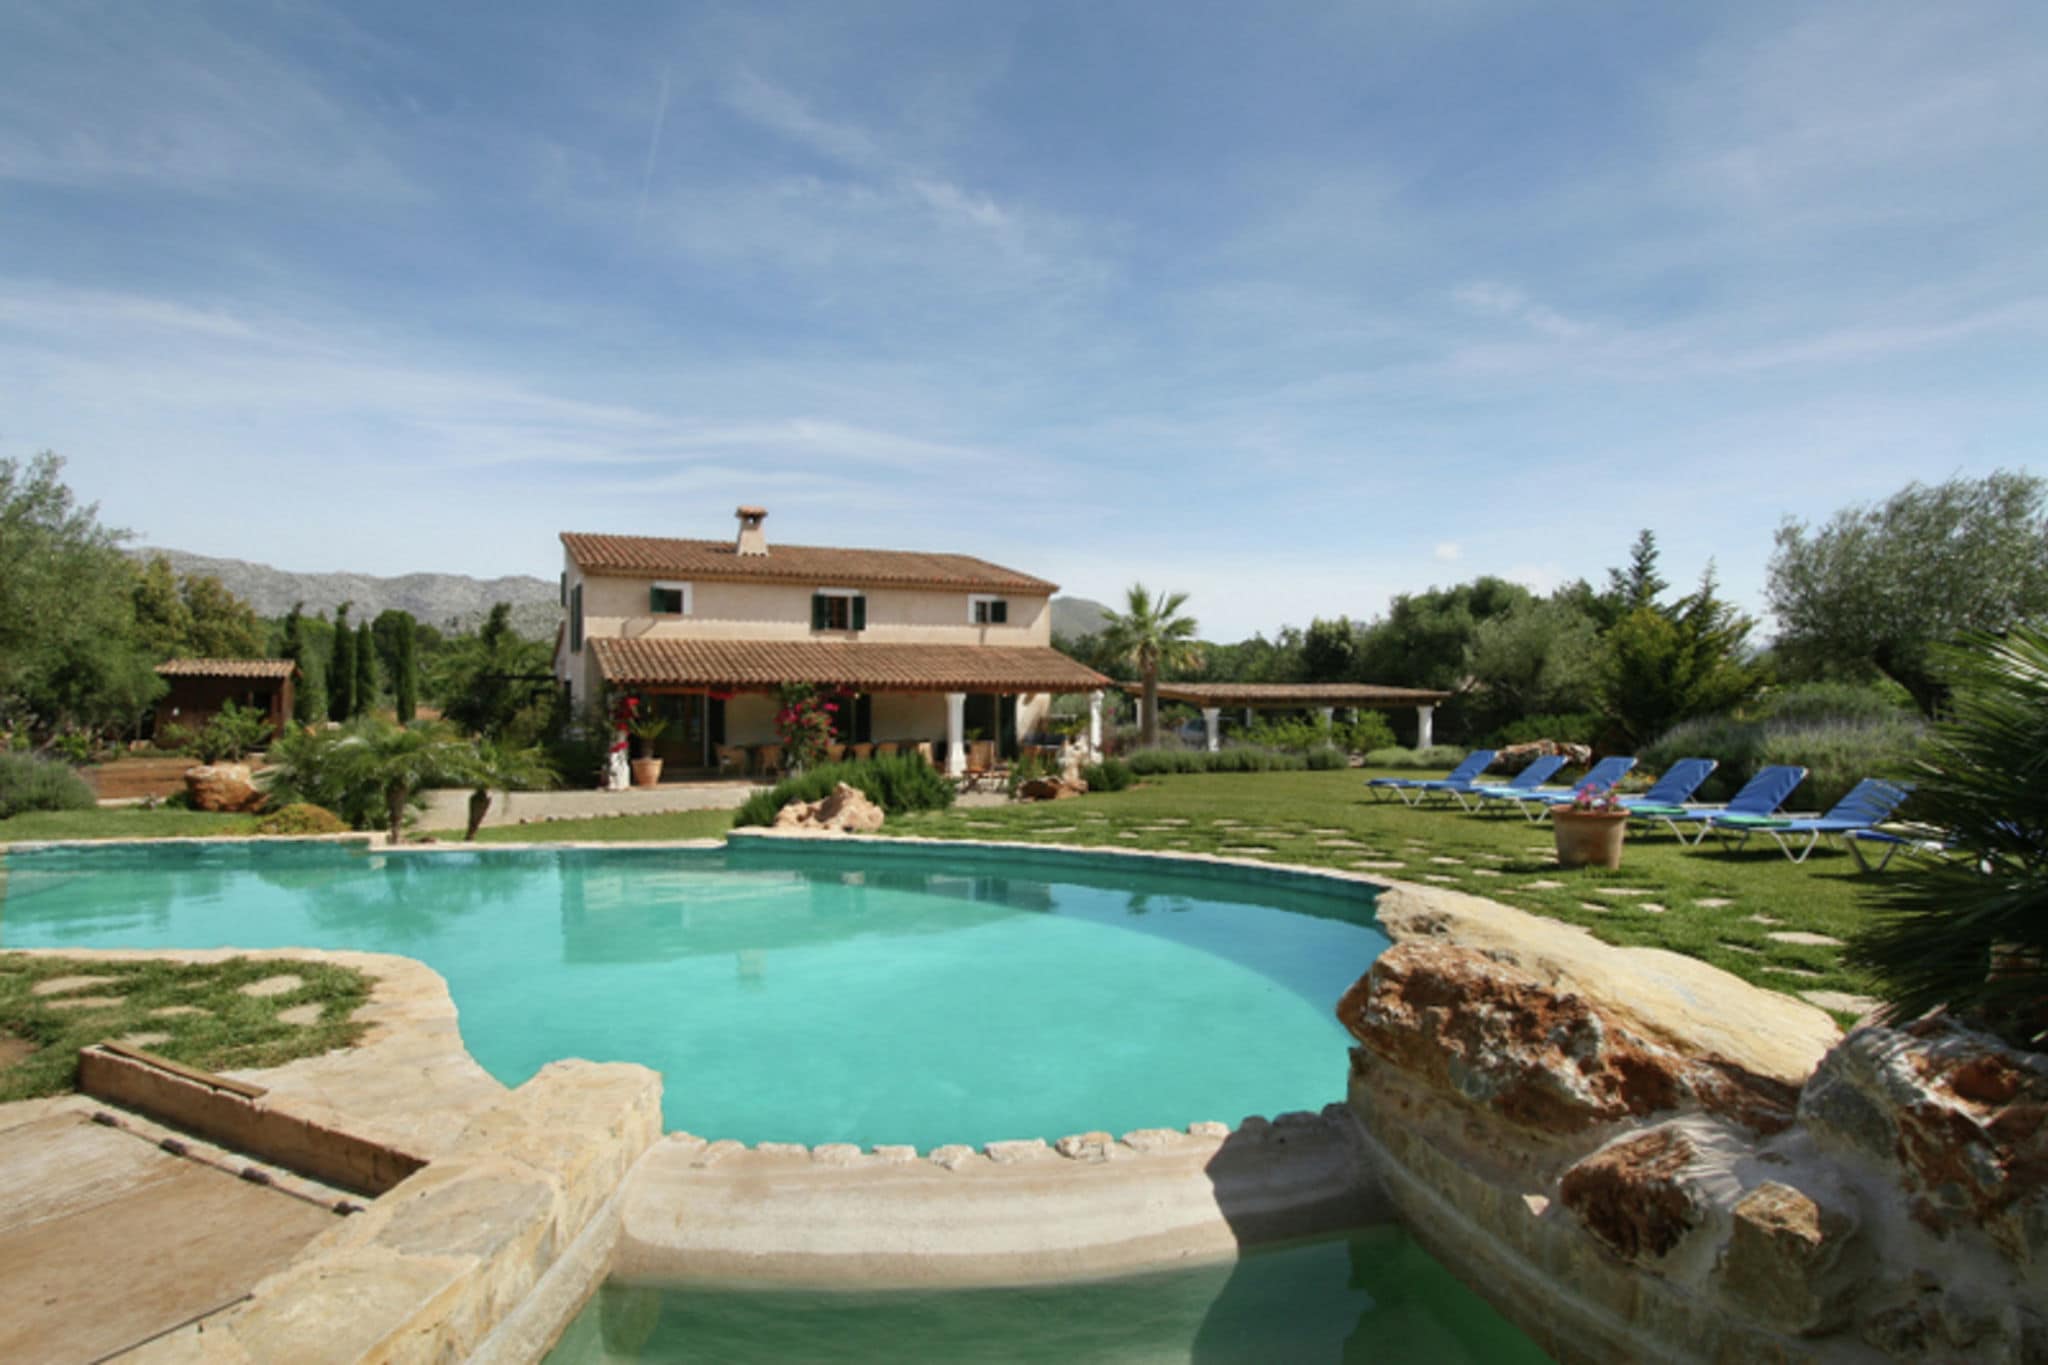 Maison de vacances spacieuse à Pollenca avec piscine privée